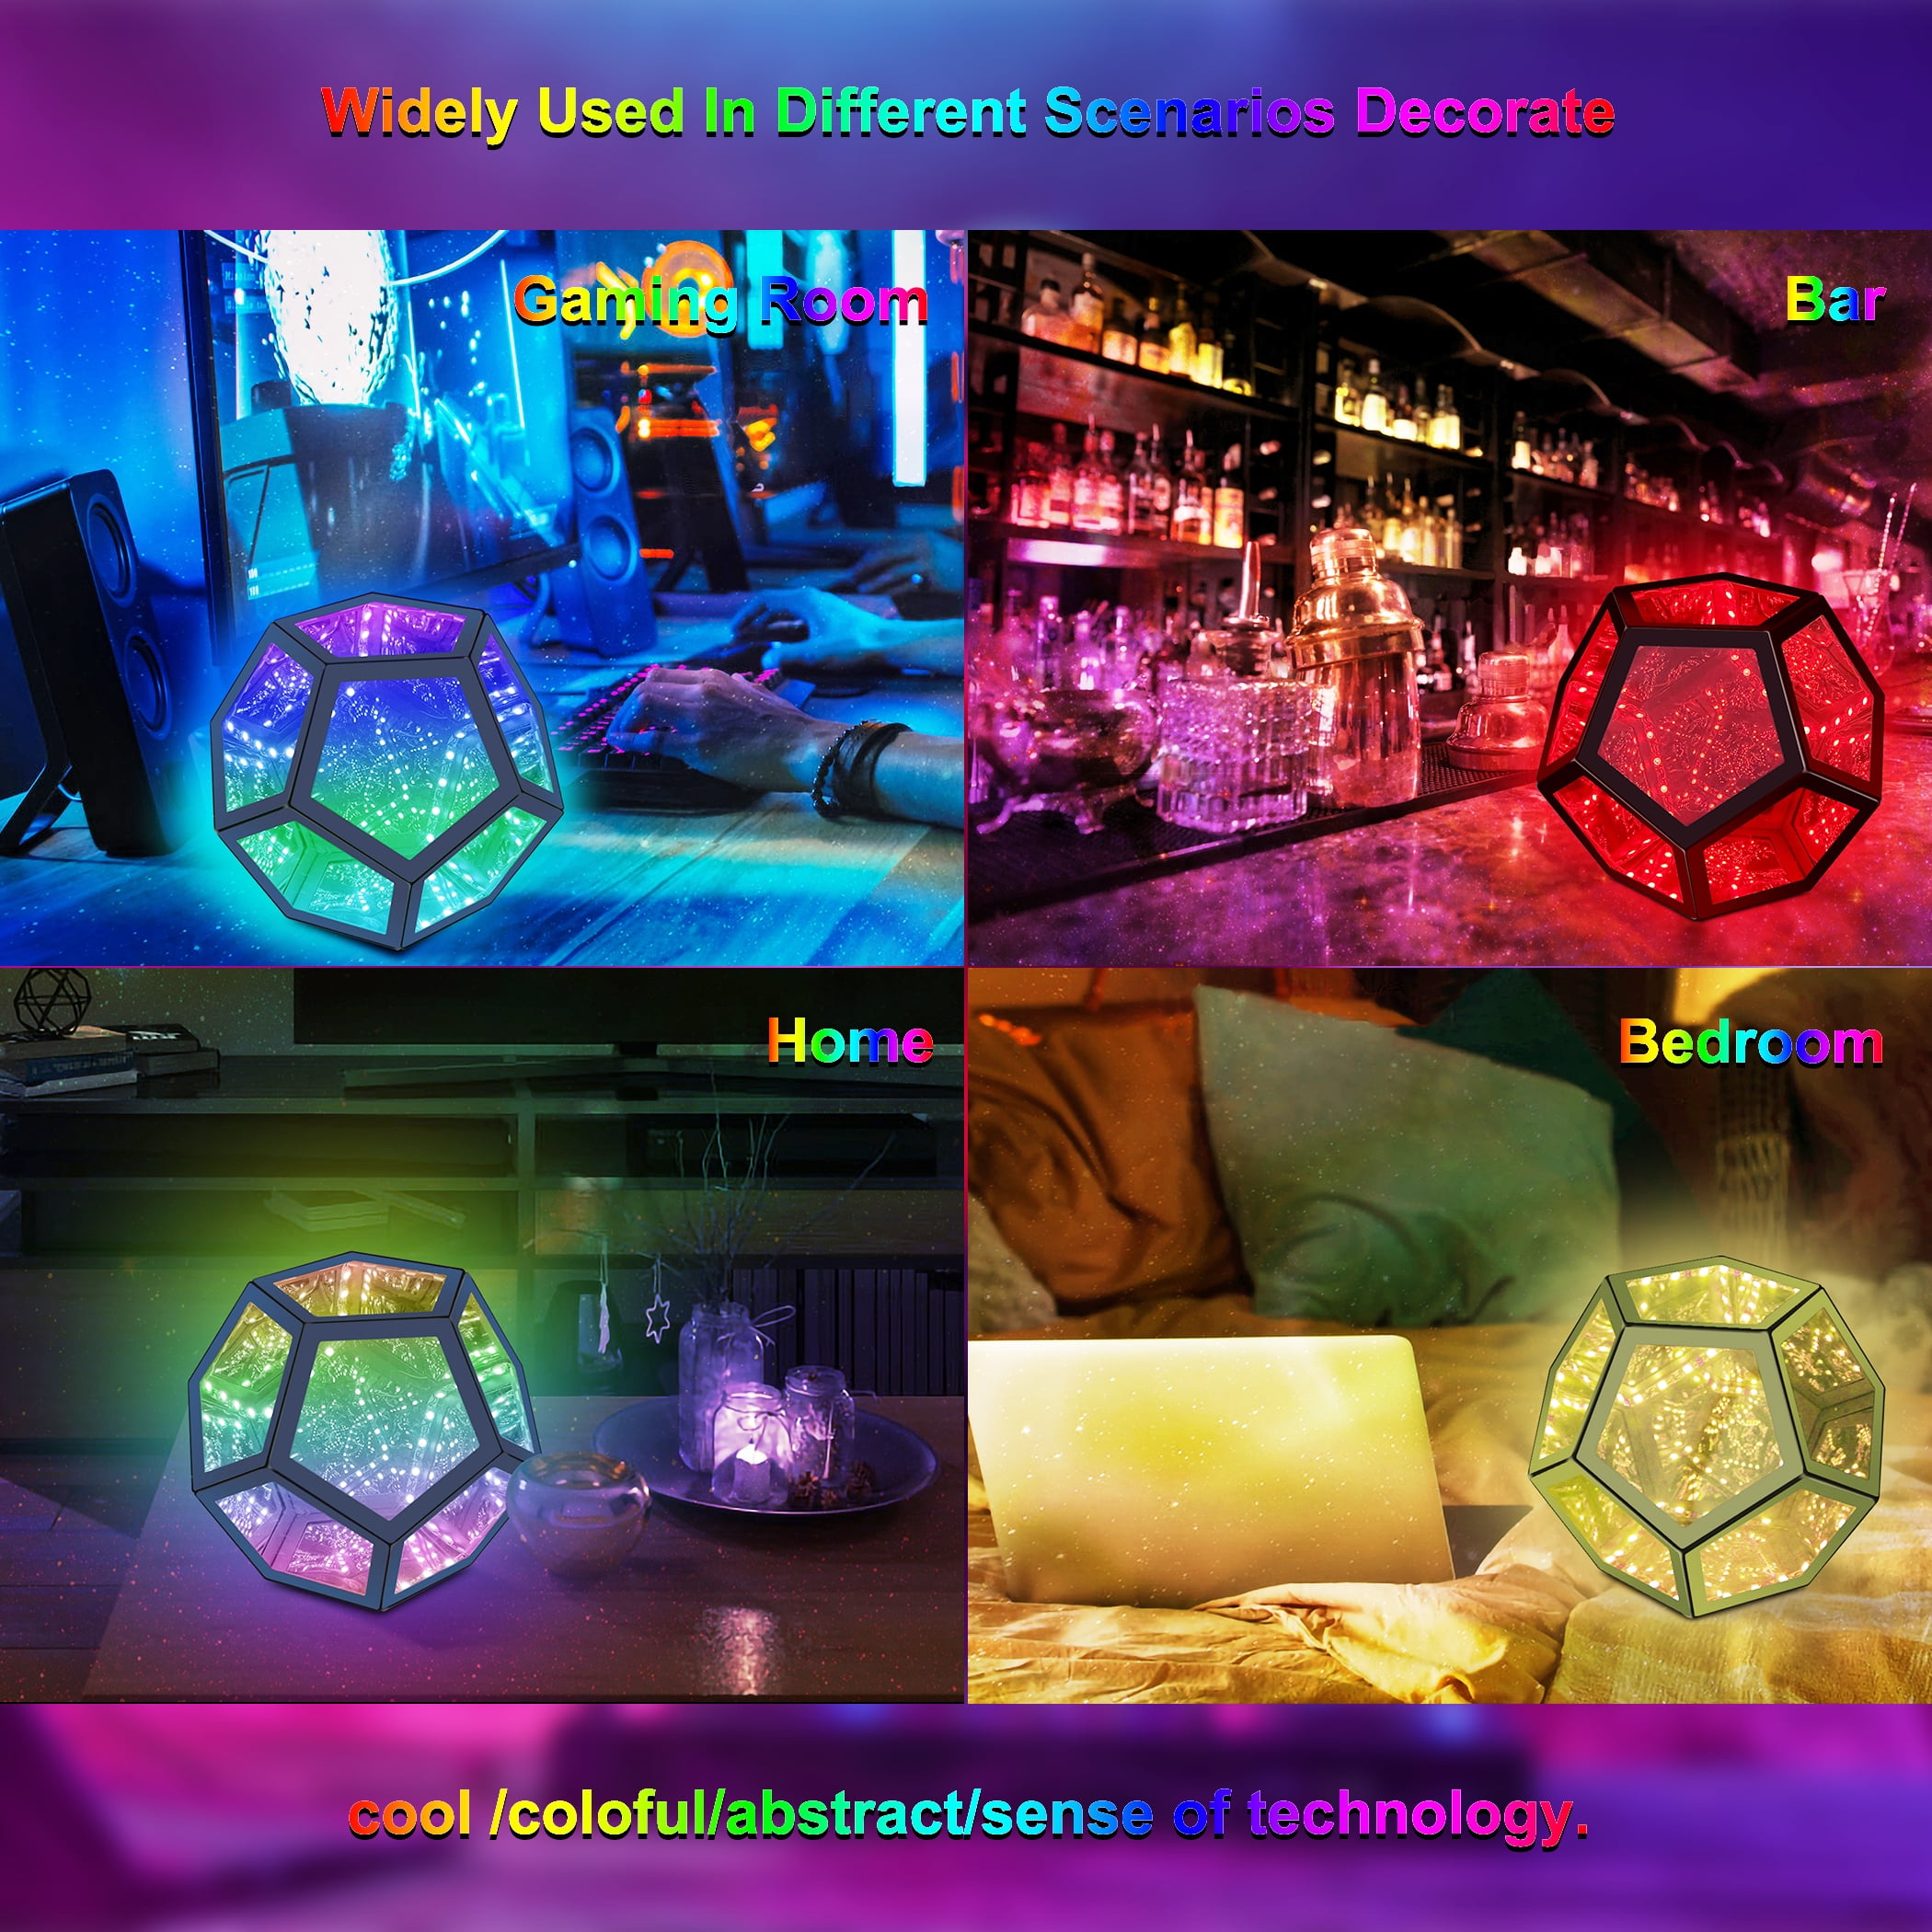 Infinite Dodecahedron Color Art Light USB Charging Lamp Home Desktop Decoration